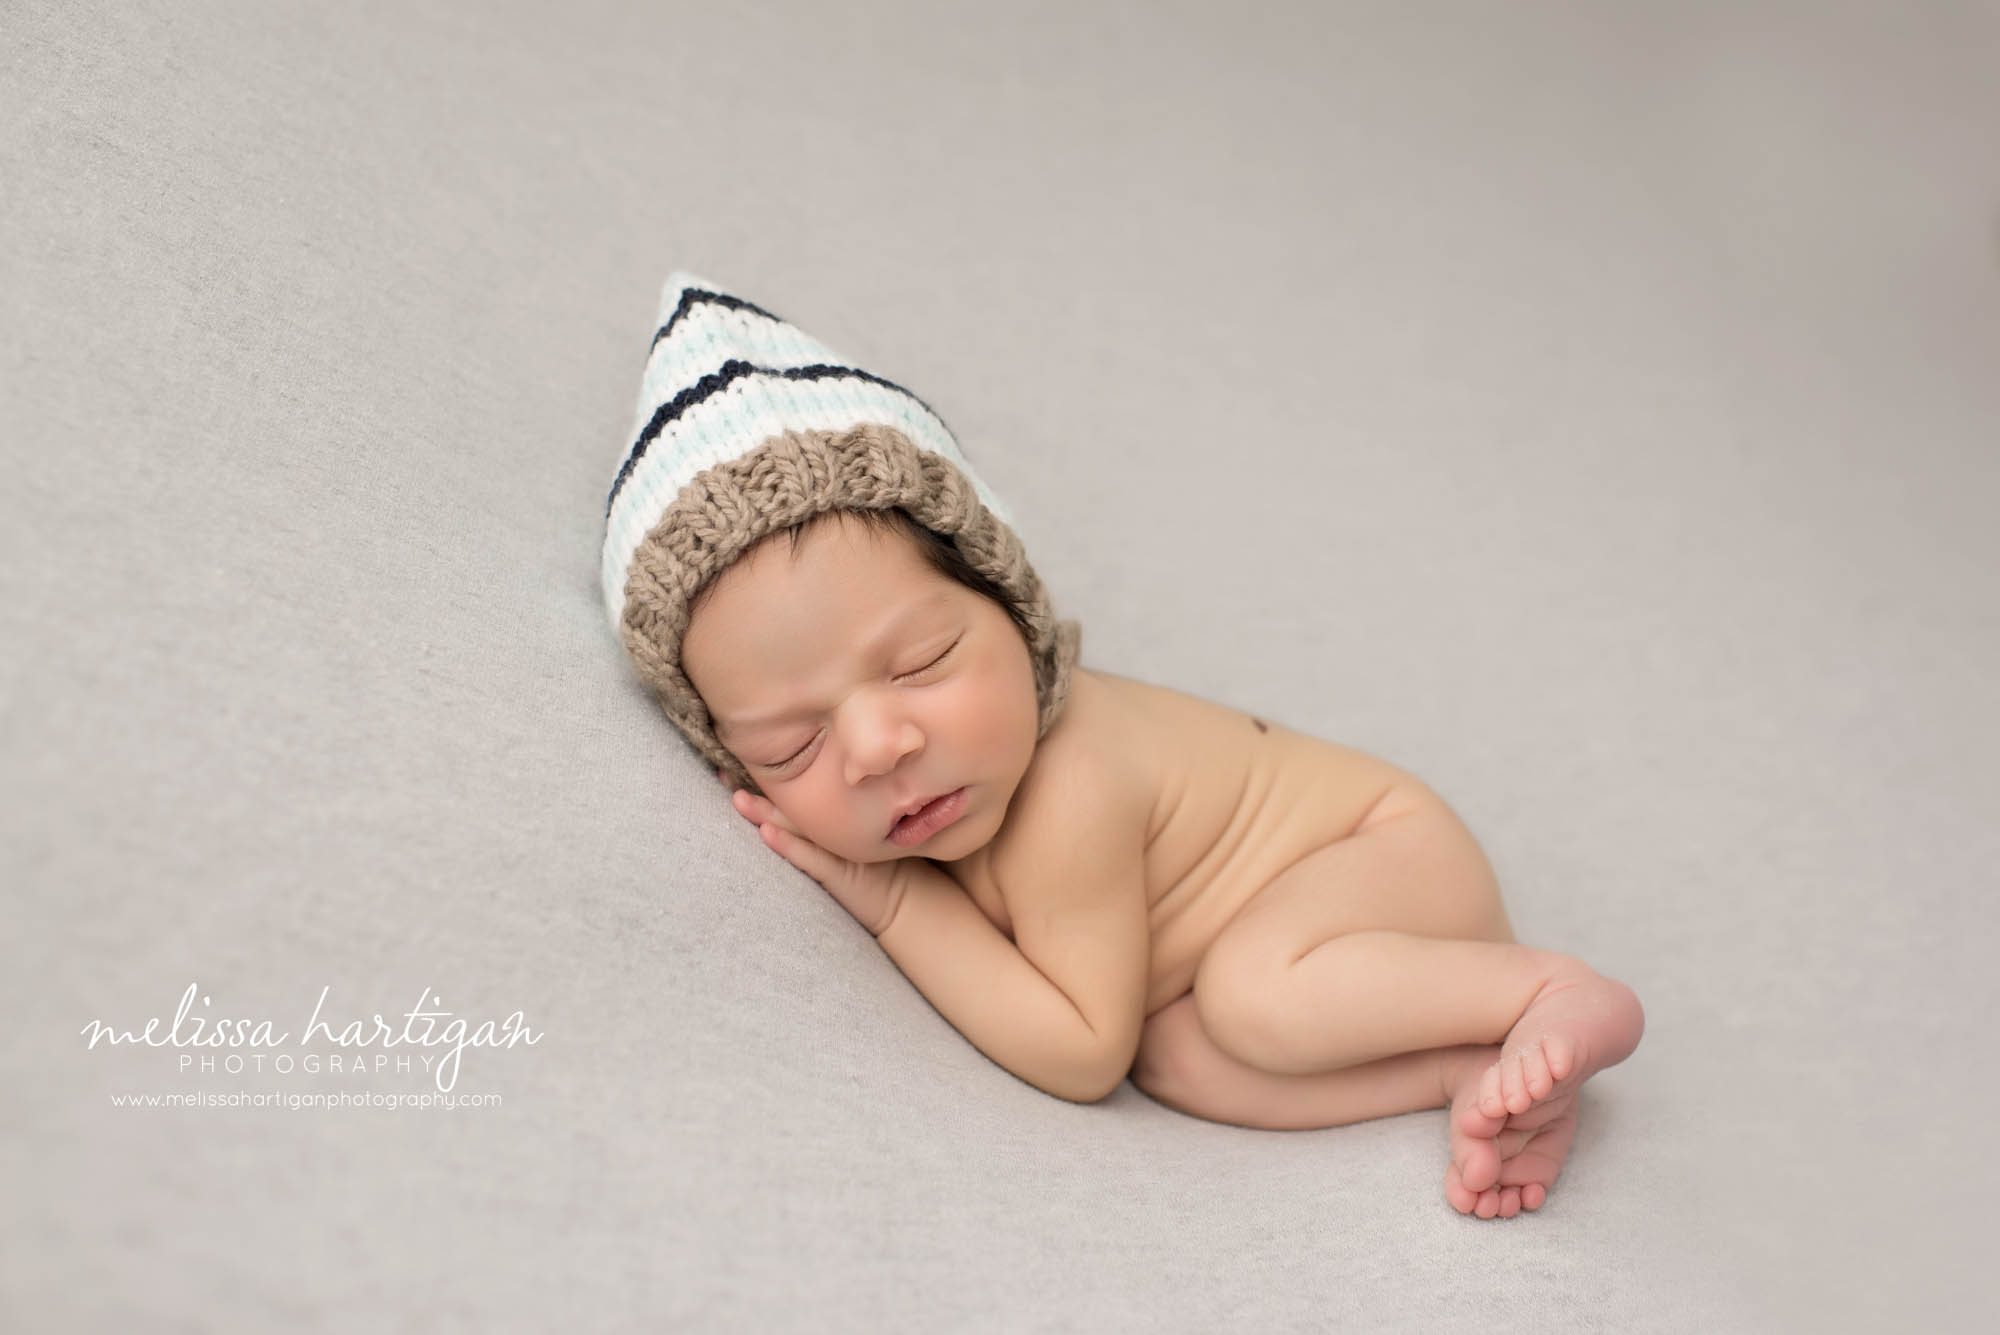 Melissa Hartigan Photography CT Newborn Photographer East Hartford baby boy sleeping on blue blanket wearing striped knit hat